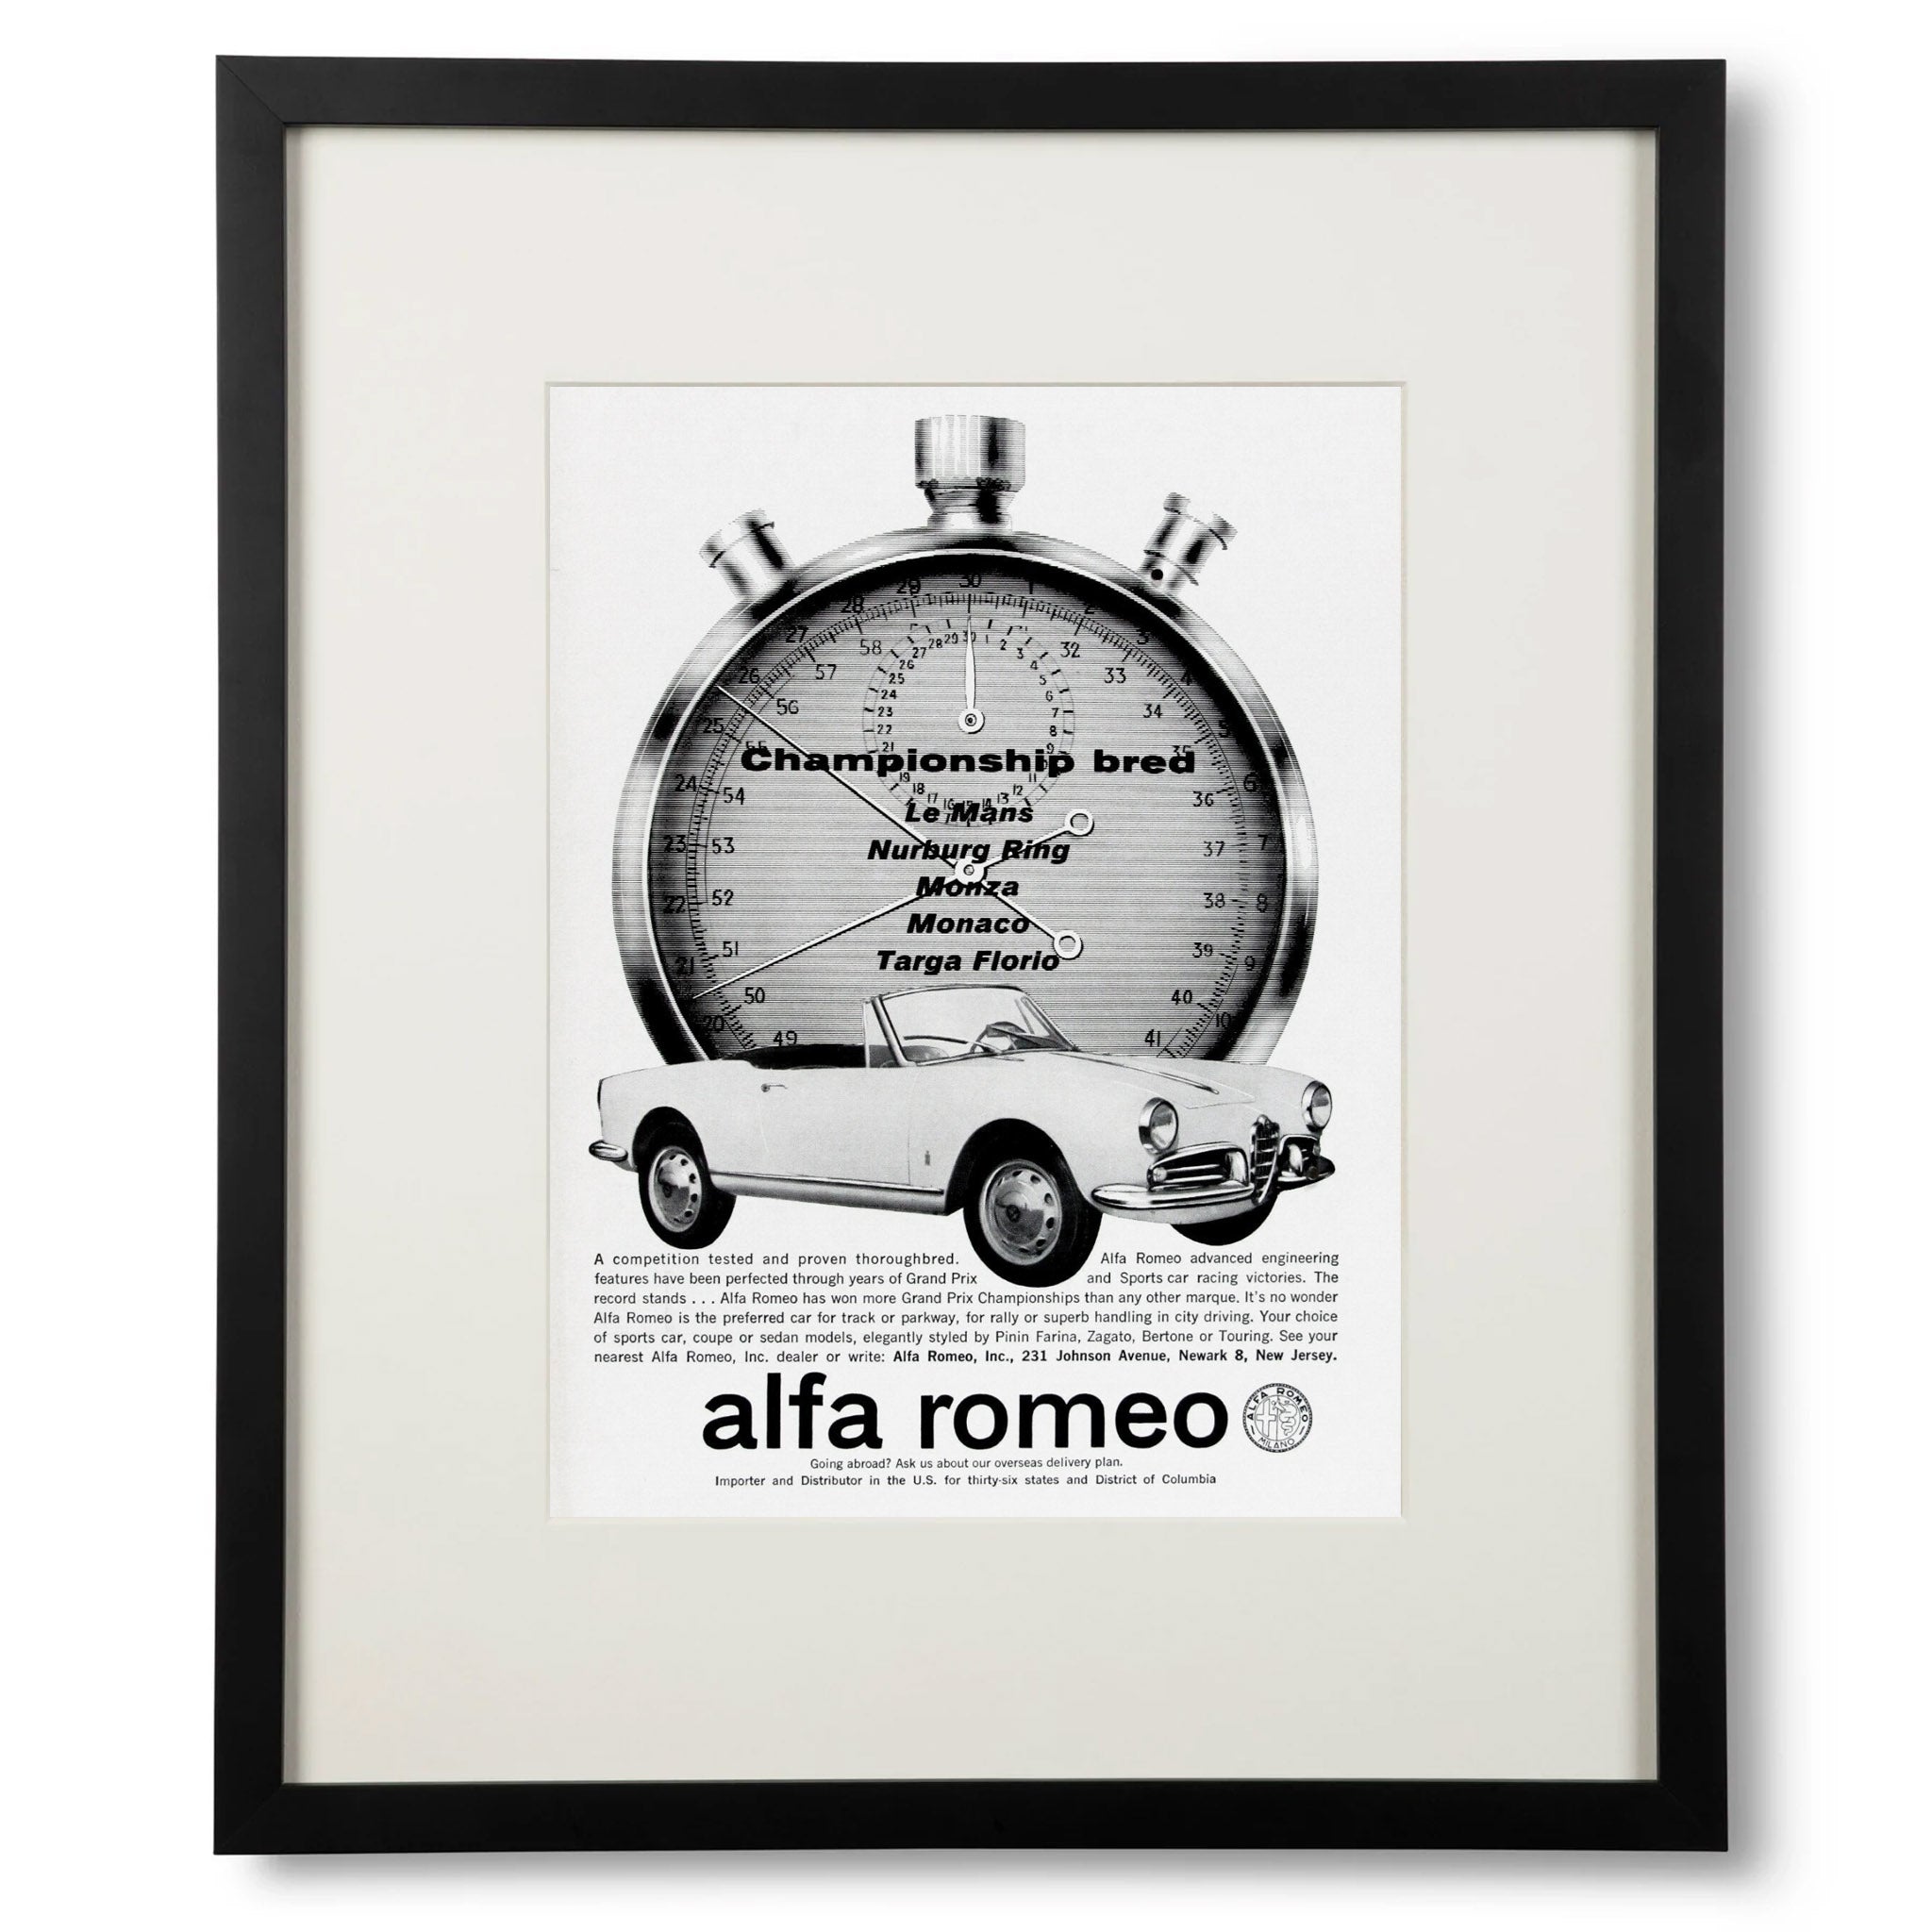 Framed Afla Romeo 1962 Championship Bred Advertisment